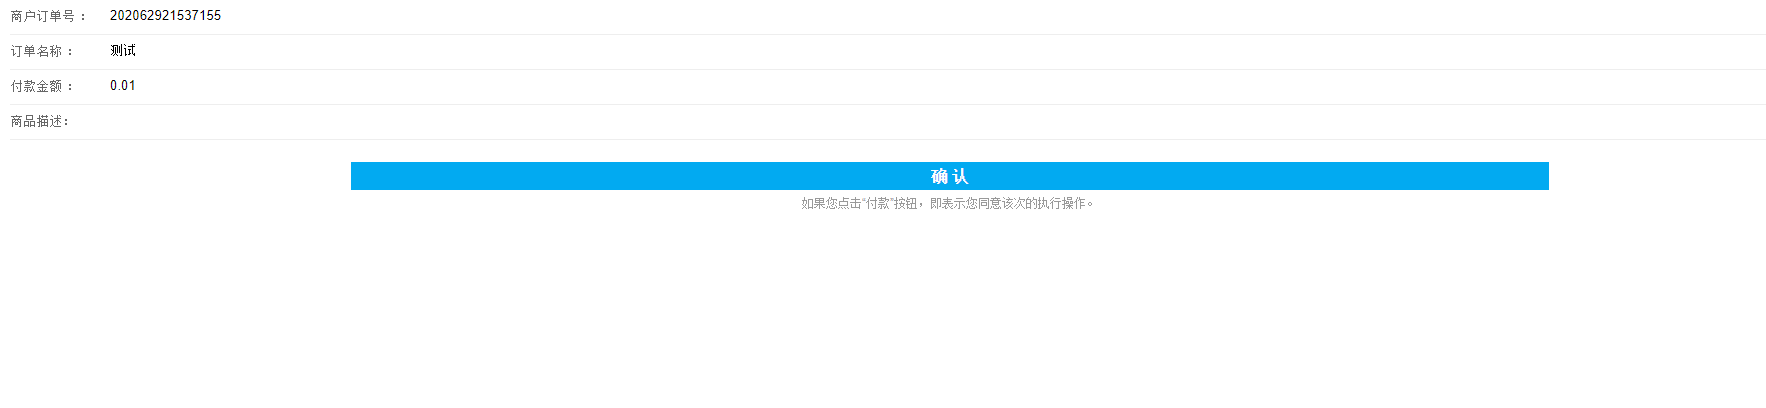 WeChat Screenshot_20200629215316.png